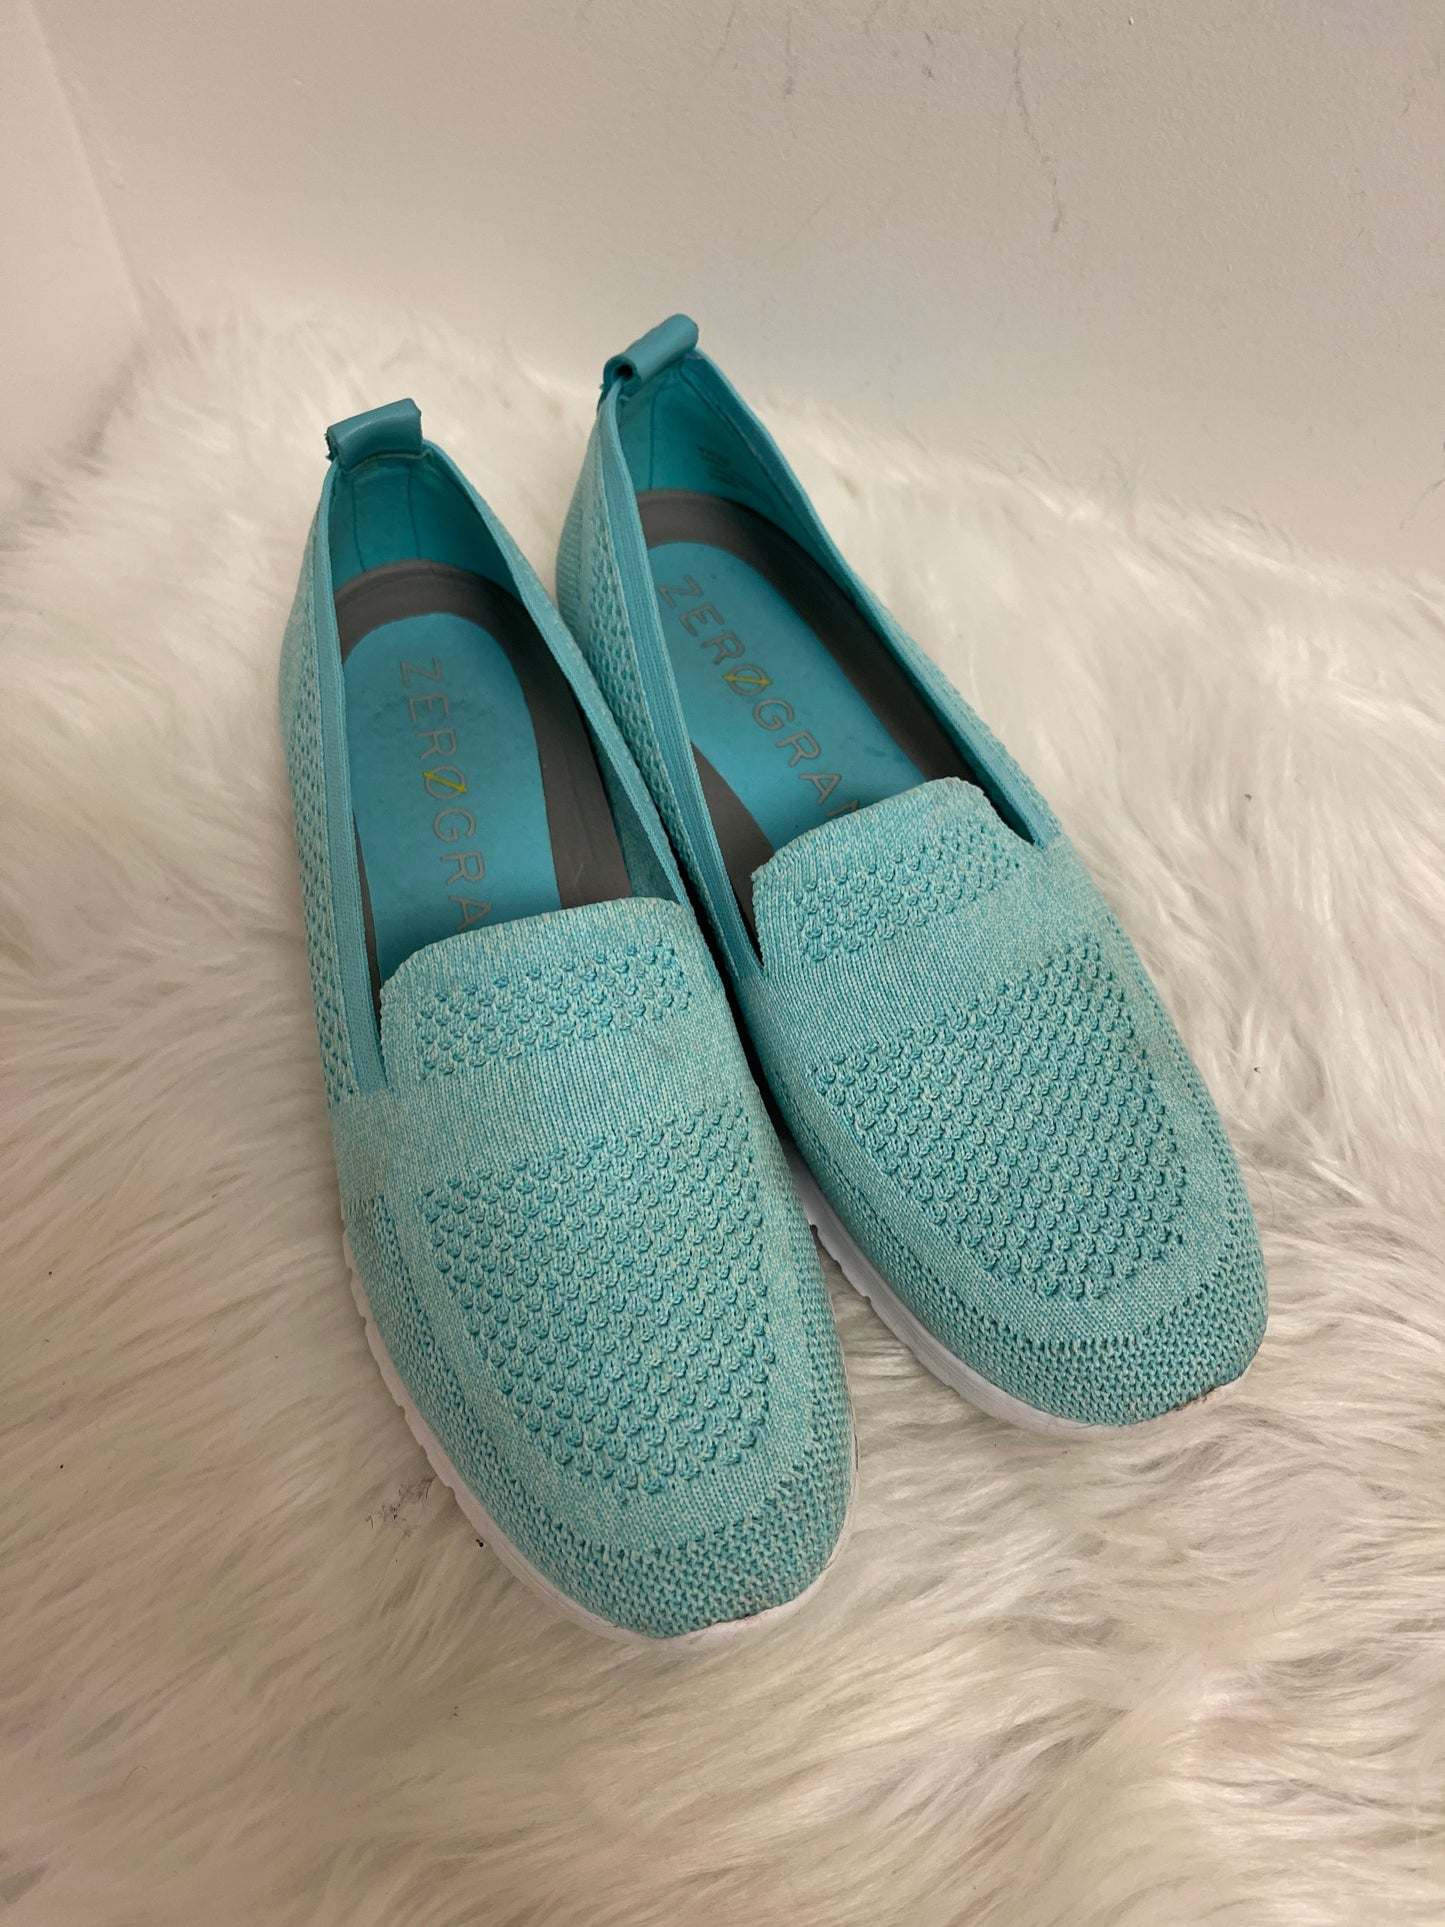 Blue Shoes Flats Cole-haan, Size 8